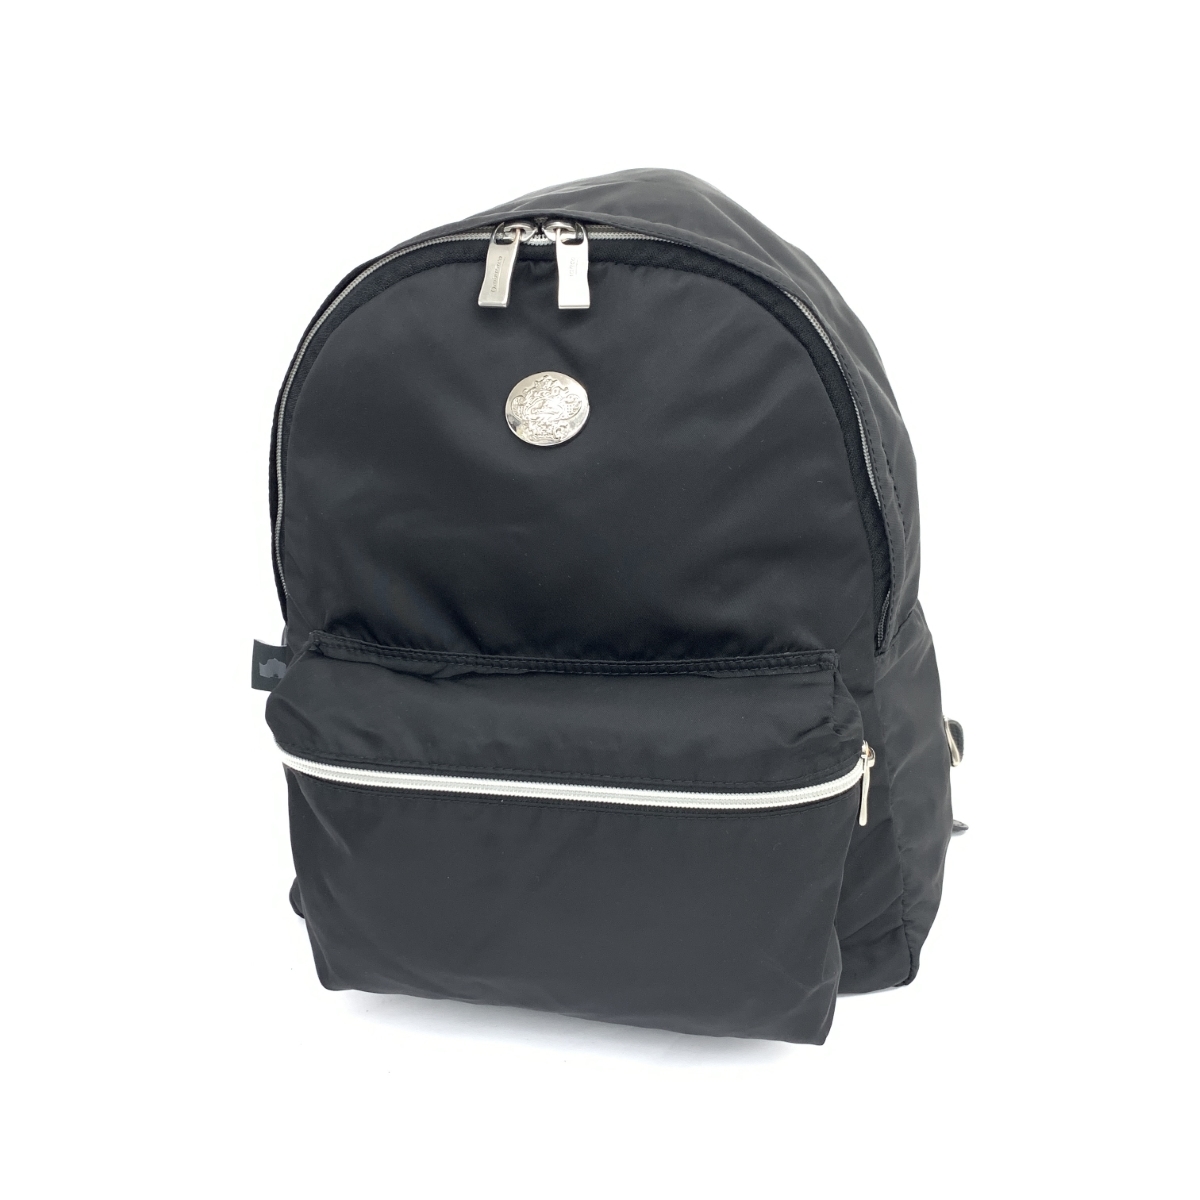 ◆orobianco オロビアンコ リュックサック◆ ブラック ナイロン ラウンドファスナー レディース バックパック bag 鞄